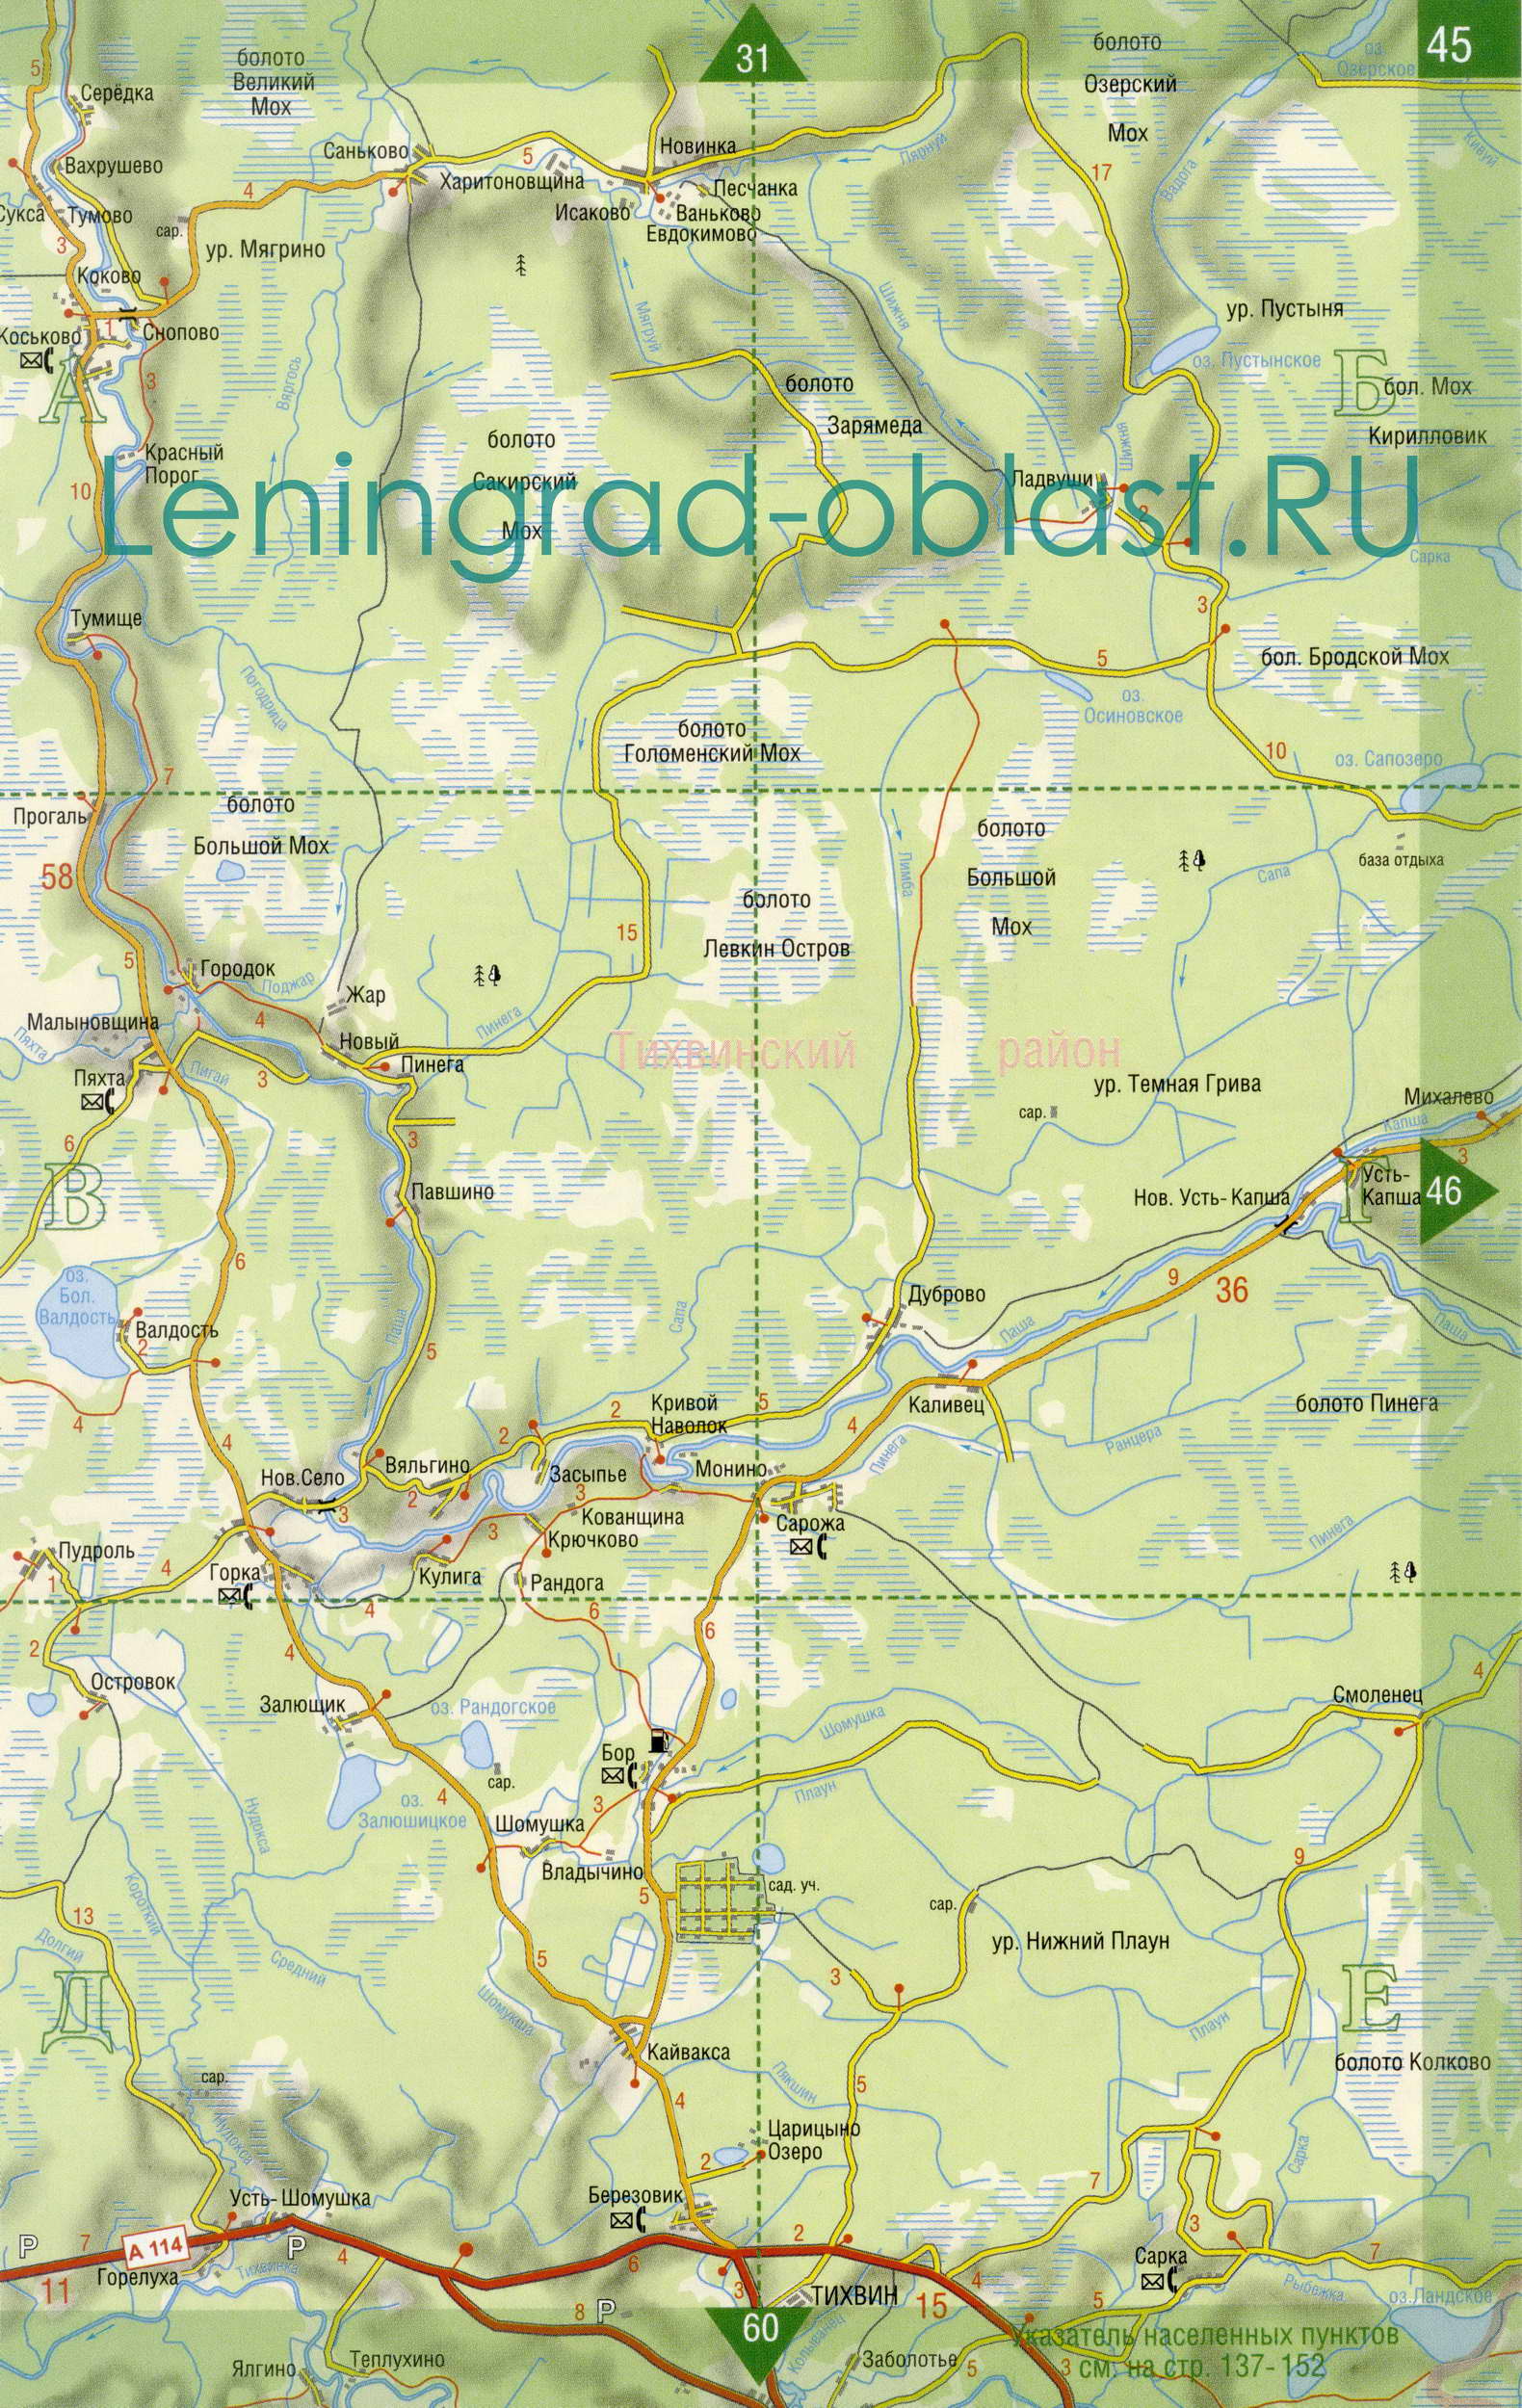 Карта Тихвинского района Ленобласти. Подробная карта Ленинградской области - Тихвинский район, B0 - 